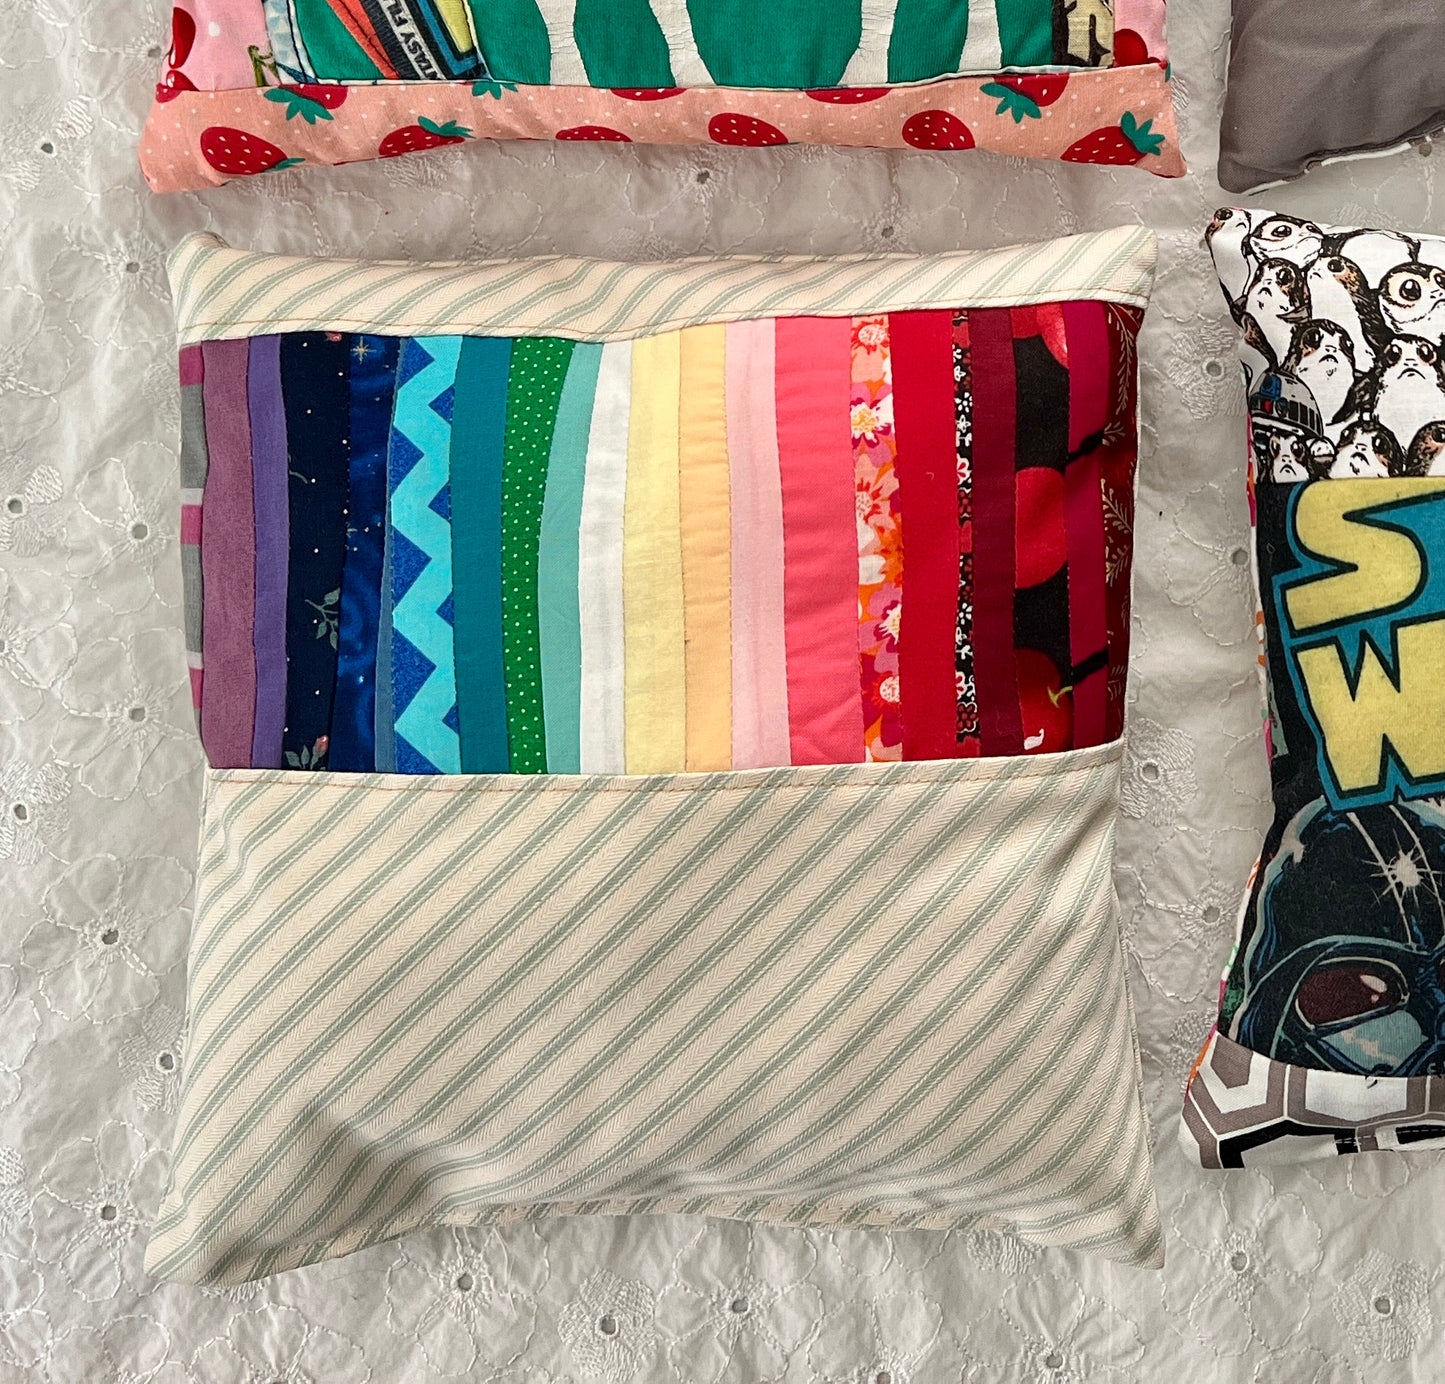 Pillow - Tooth Fairy Pocket - Rainbows, Star Wars, Ben & Jerry’s